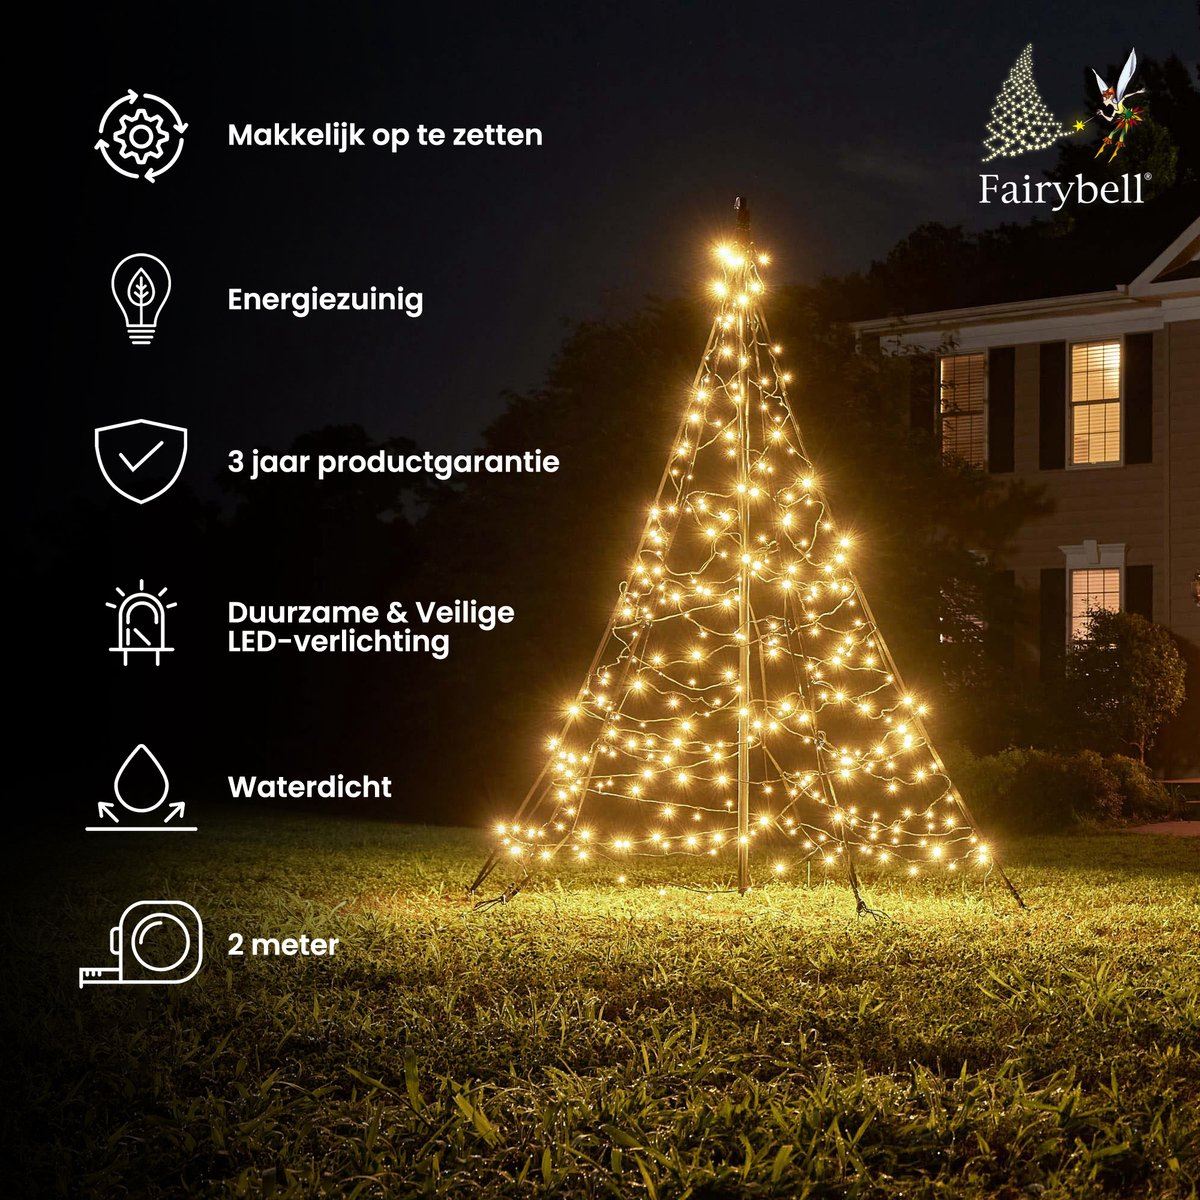 Fairybell flagpole Christmas tree - 200 cm - 300 warm white led lights - includes flagpole